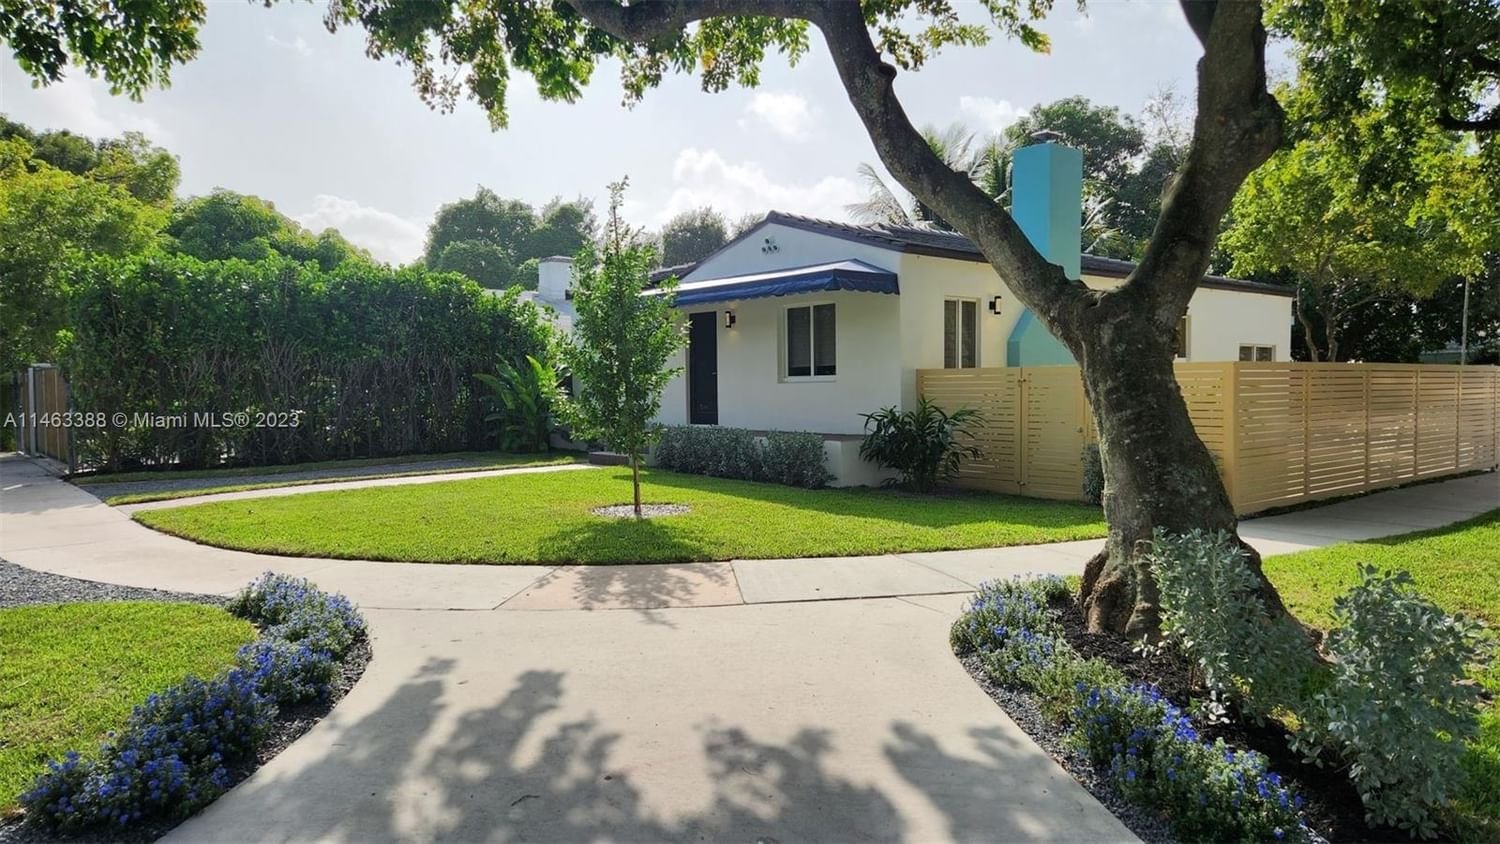 Real estate property located at 442 46th St, Miami-Dade County, COLUMBIA PARK CORR PL, Miami, FL